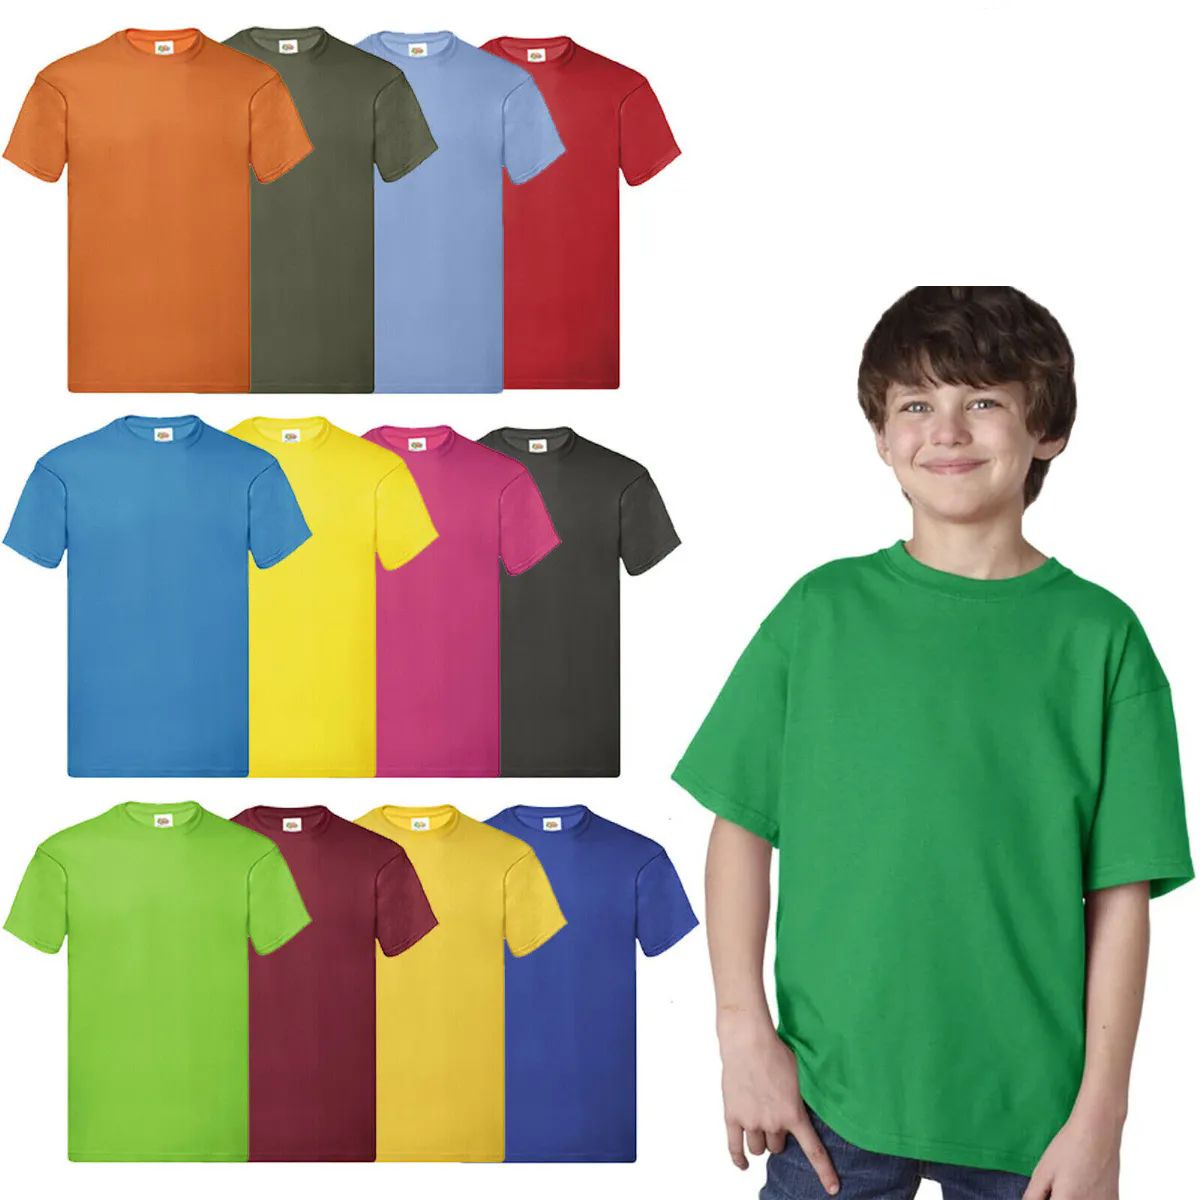 144 Wholesale Billion Hats Kids Youth Cotton Assorted Colors T Shirts Size xs